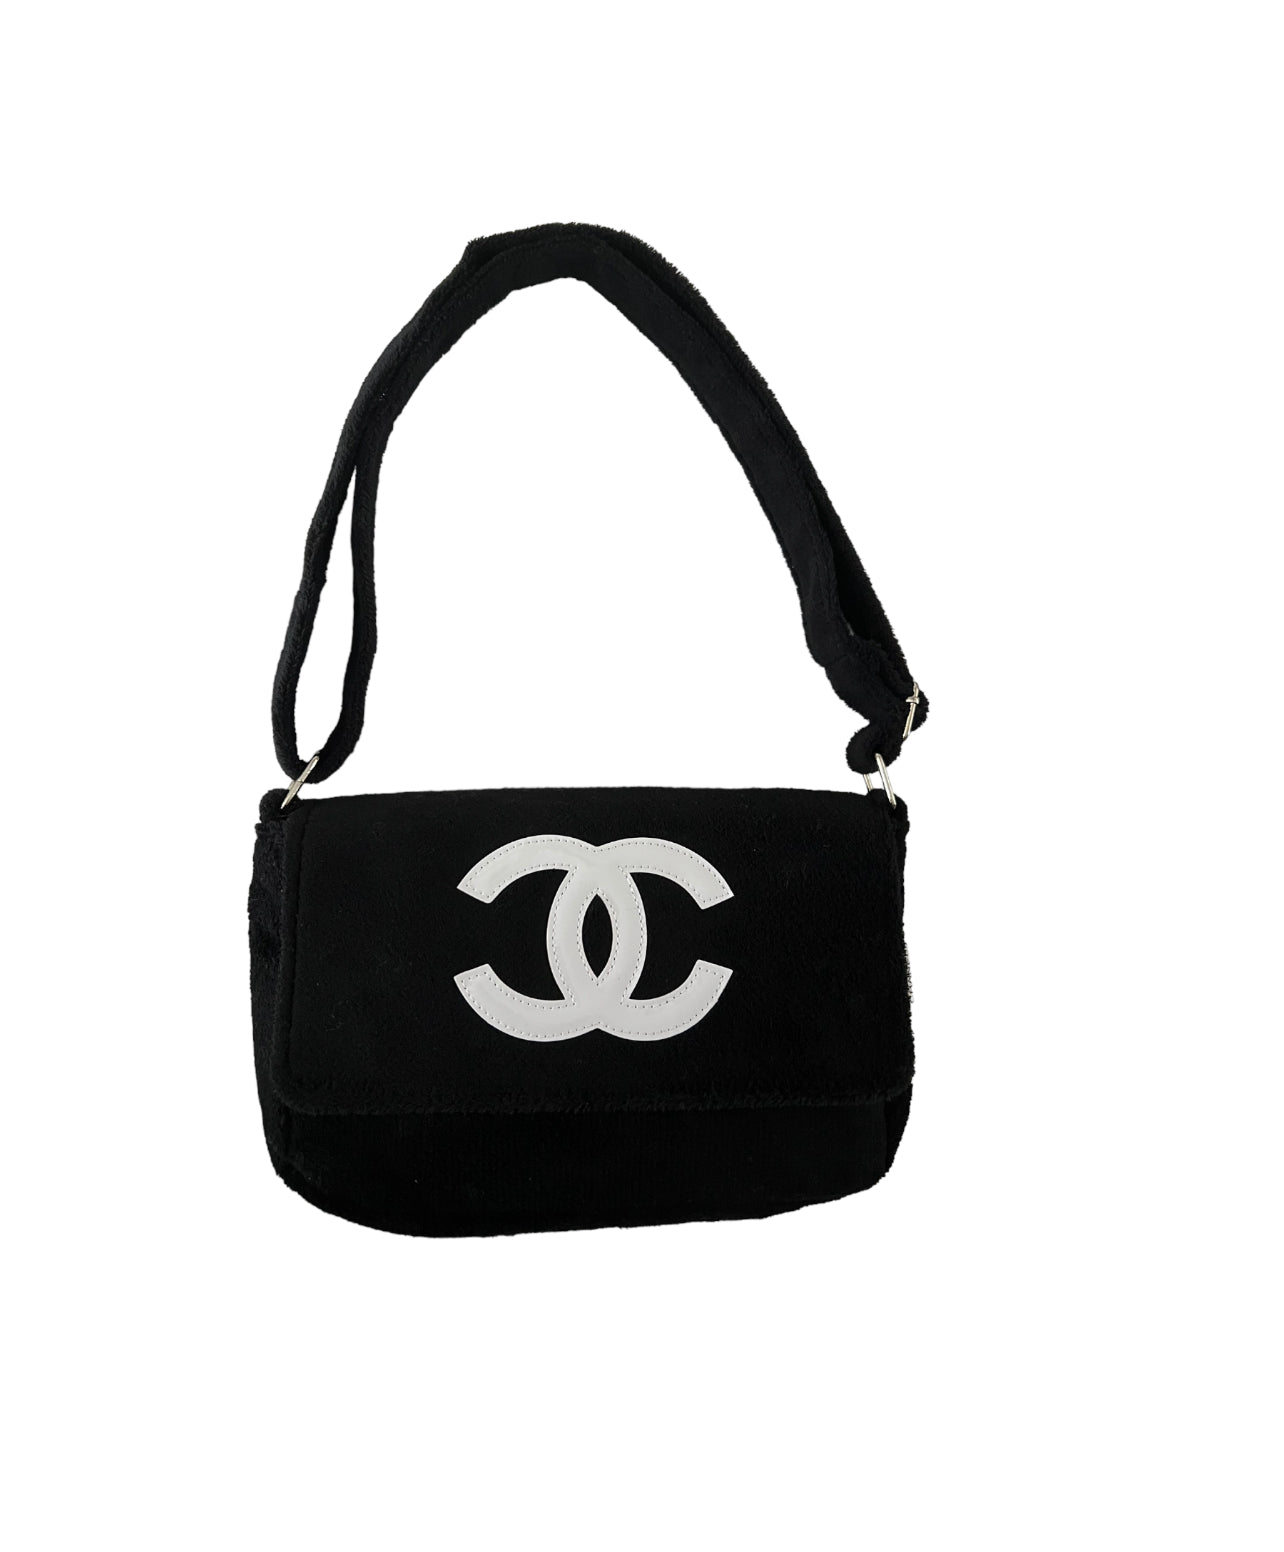 Chanel vintage precision bag